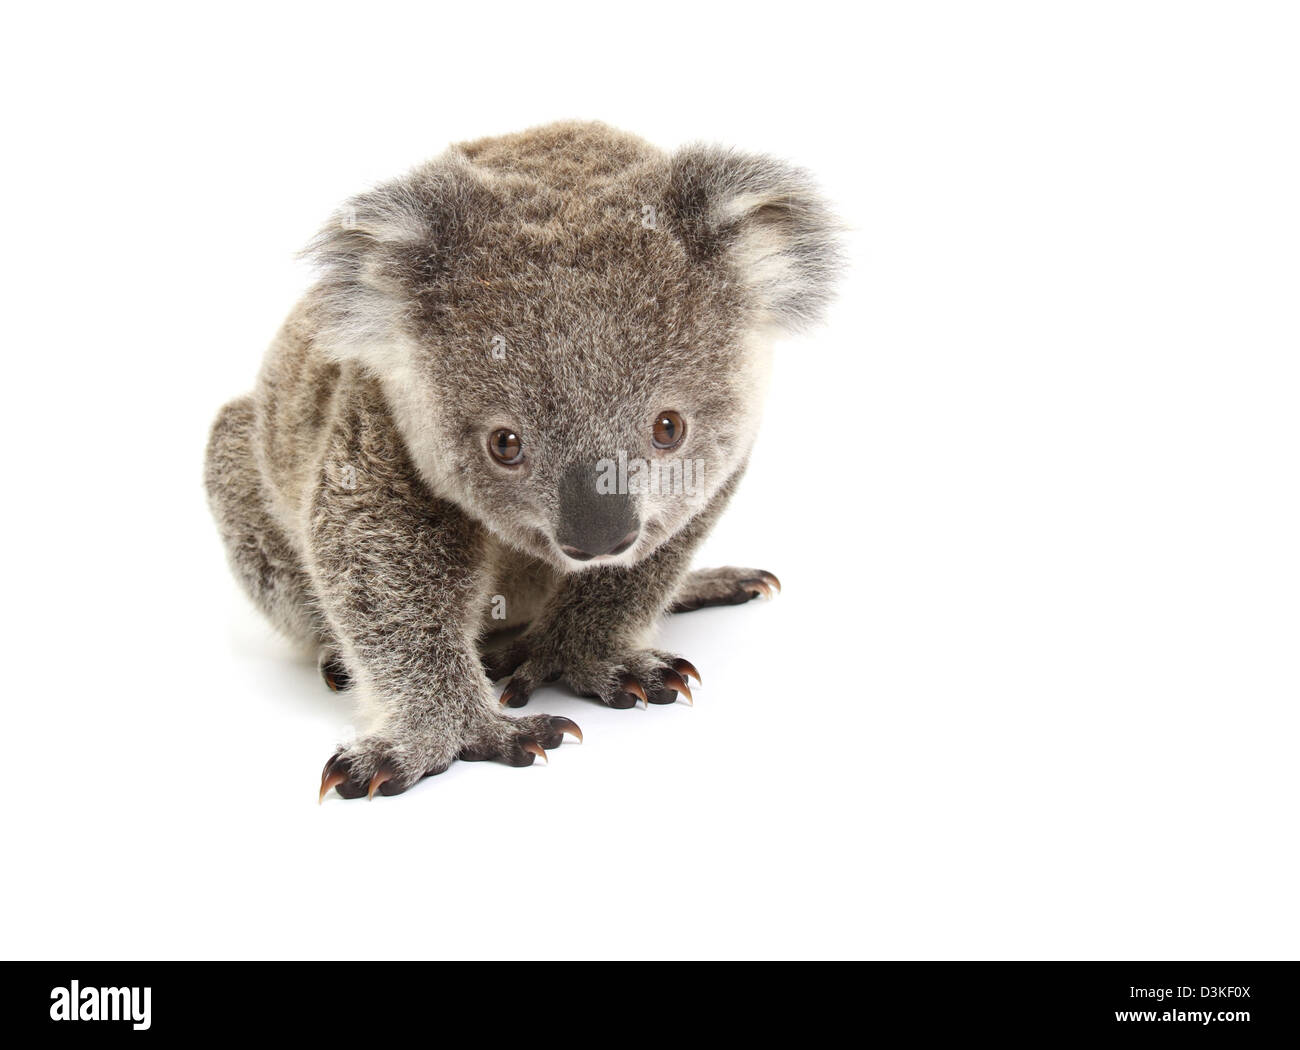 Koala in a studio Stock Photo